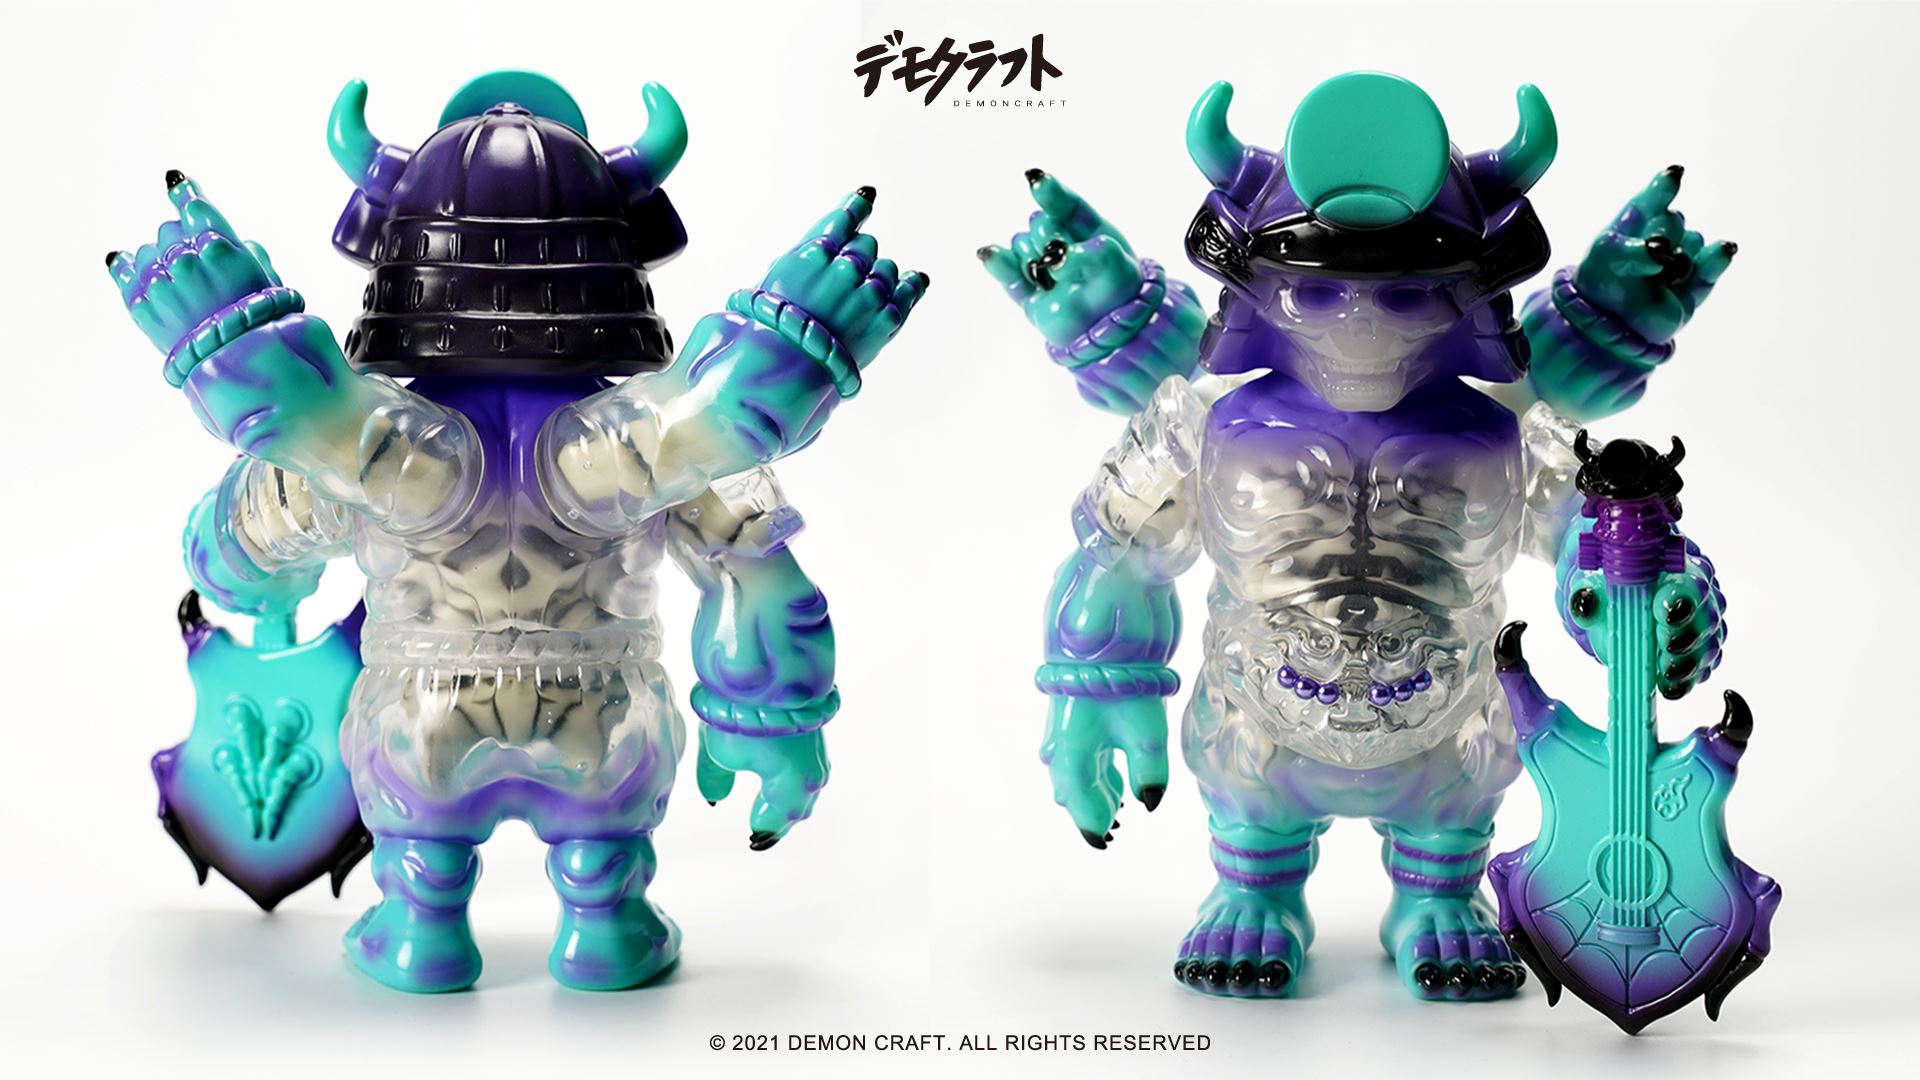 Demon Craft Ushioni Samurai By Scotty Wang x Joy TOYS - The Toy